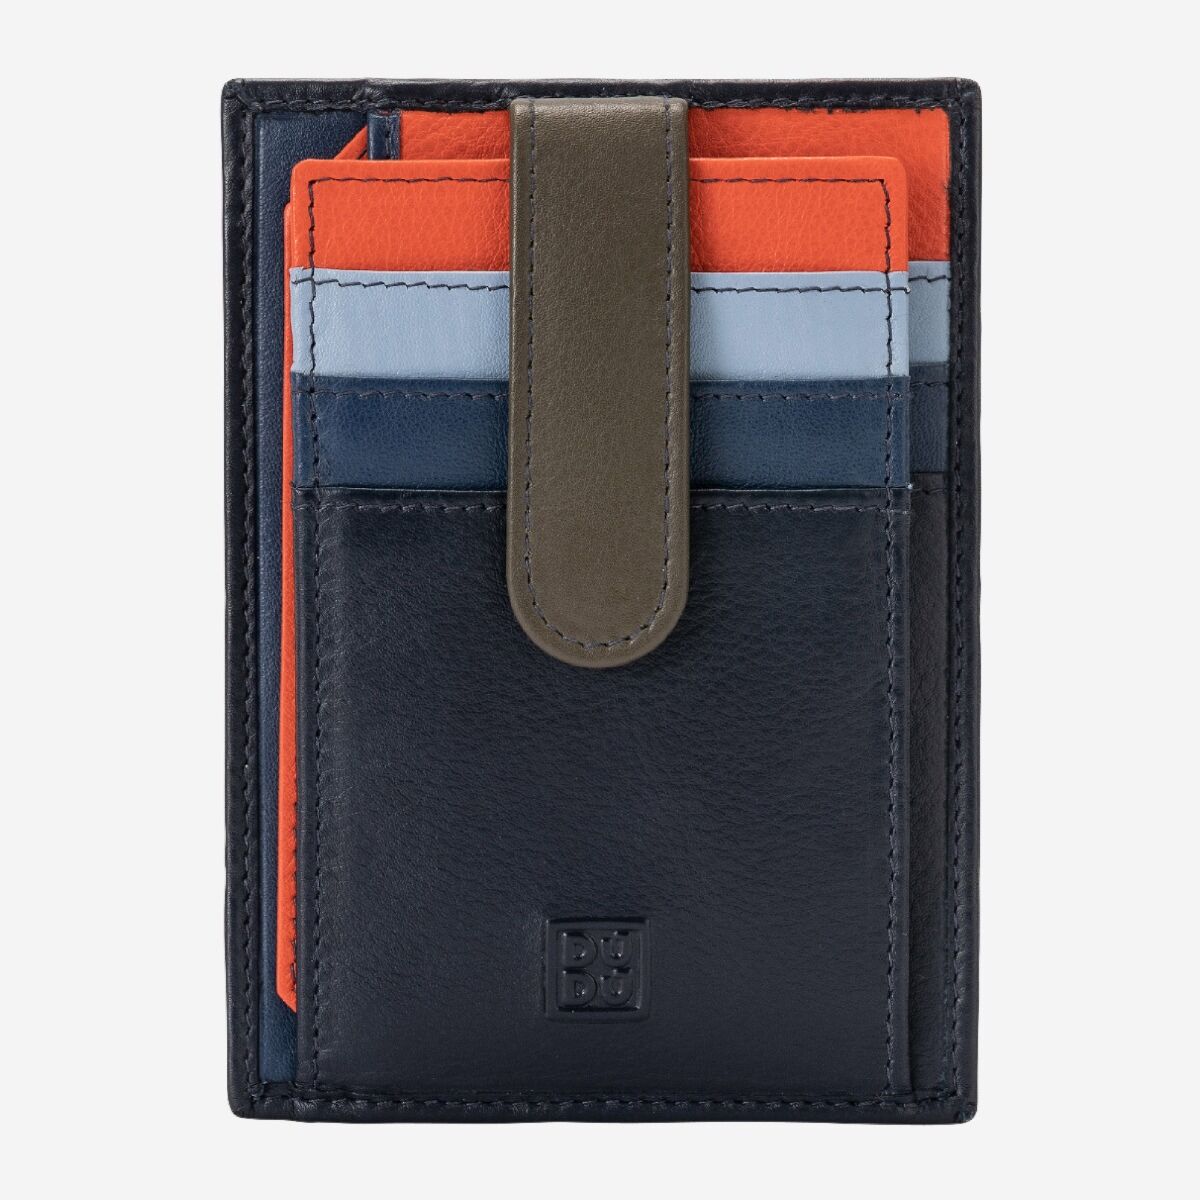 DuDu Compact multi color credit card holder wallet - Navy